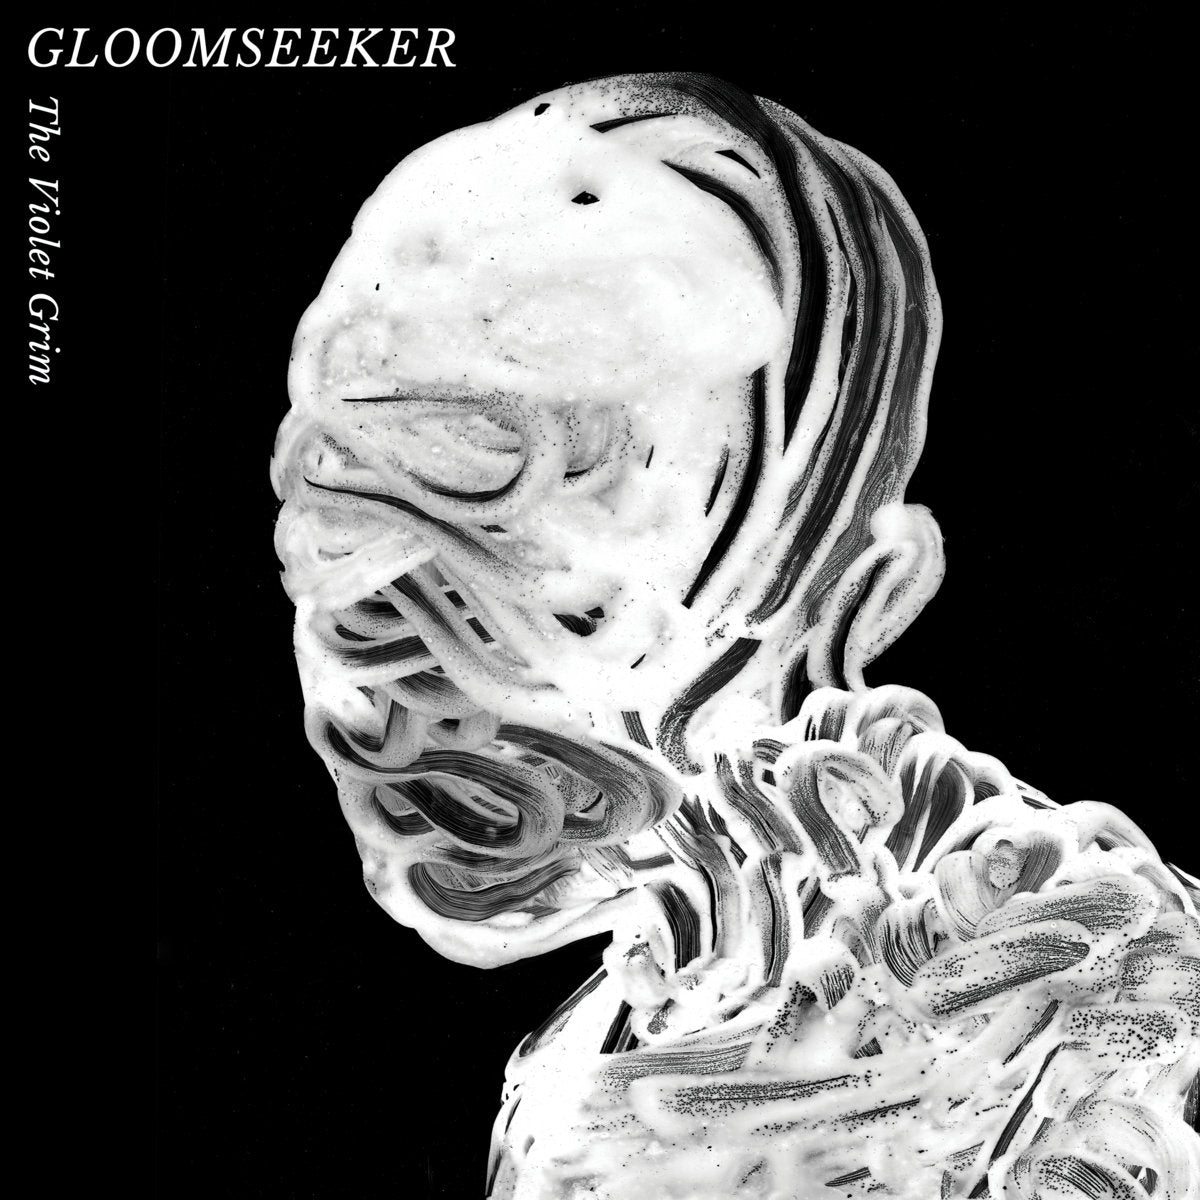 Gloomseeker - "The Violet Grim" Cassette